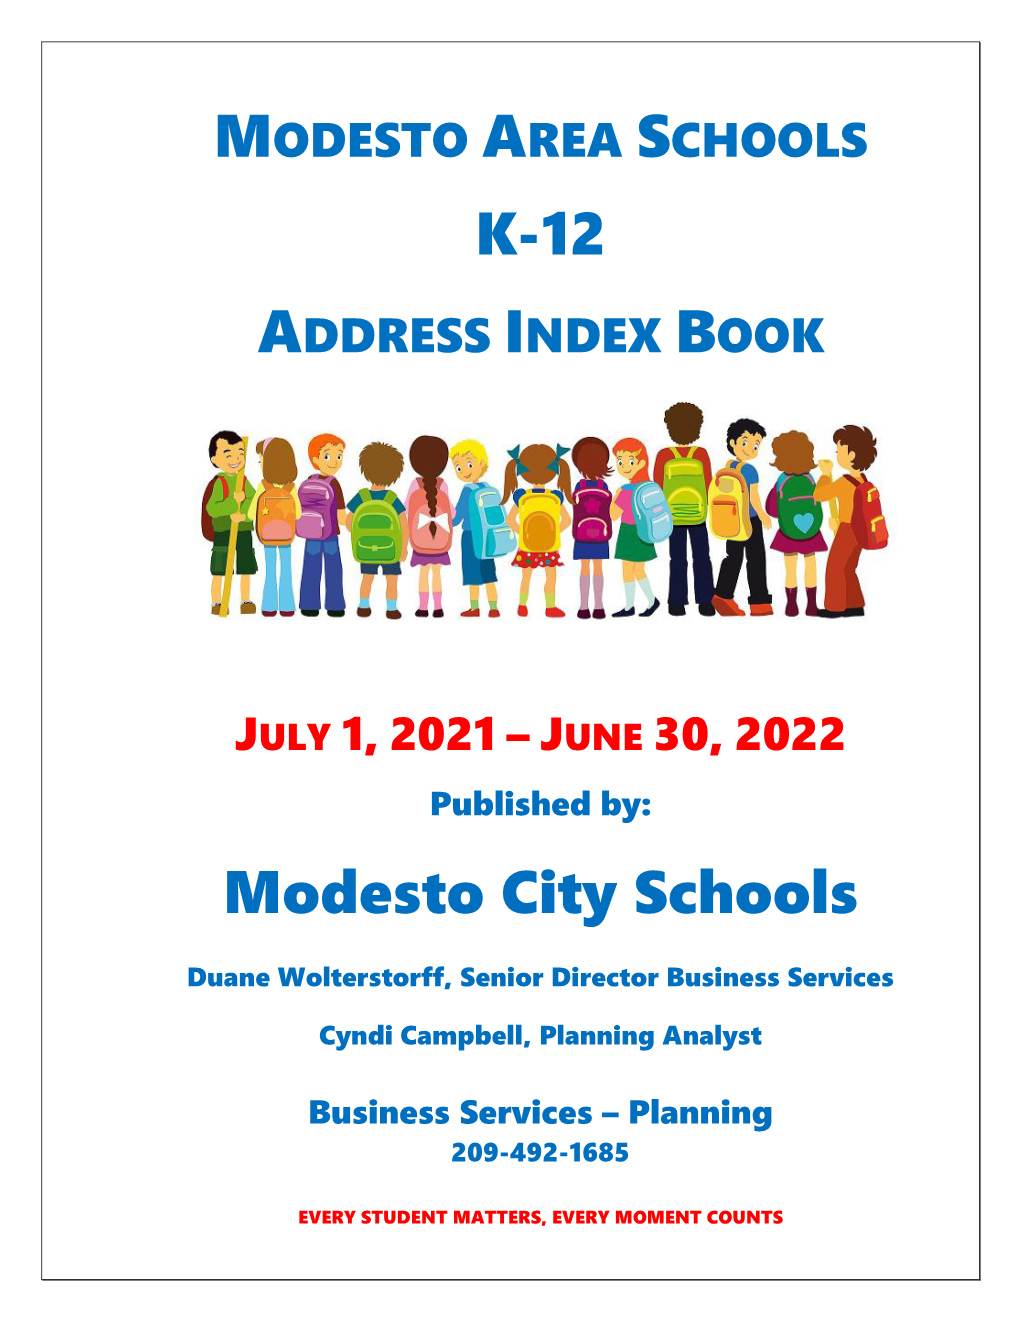 Modesto Area Schools K-12 Address Index Book